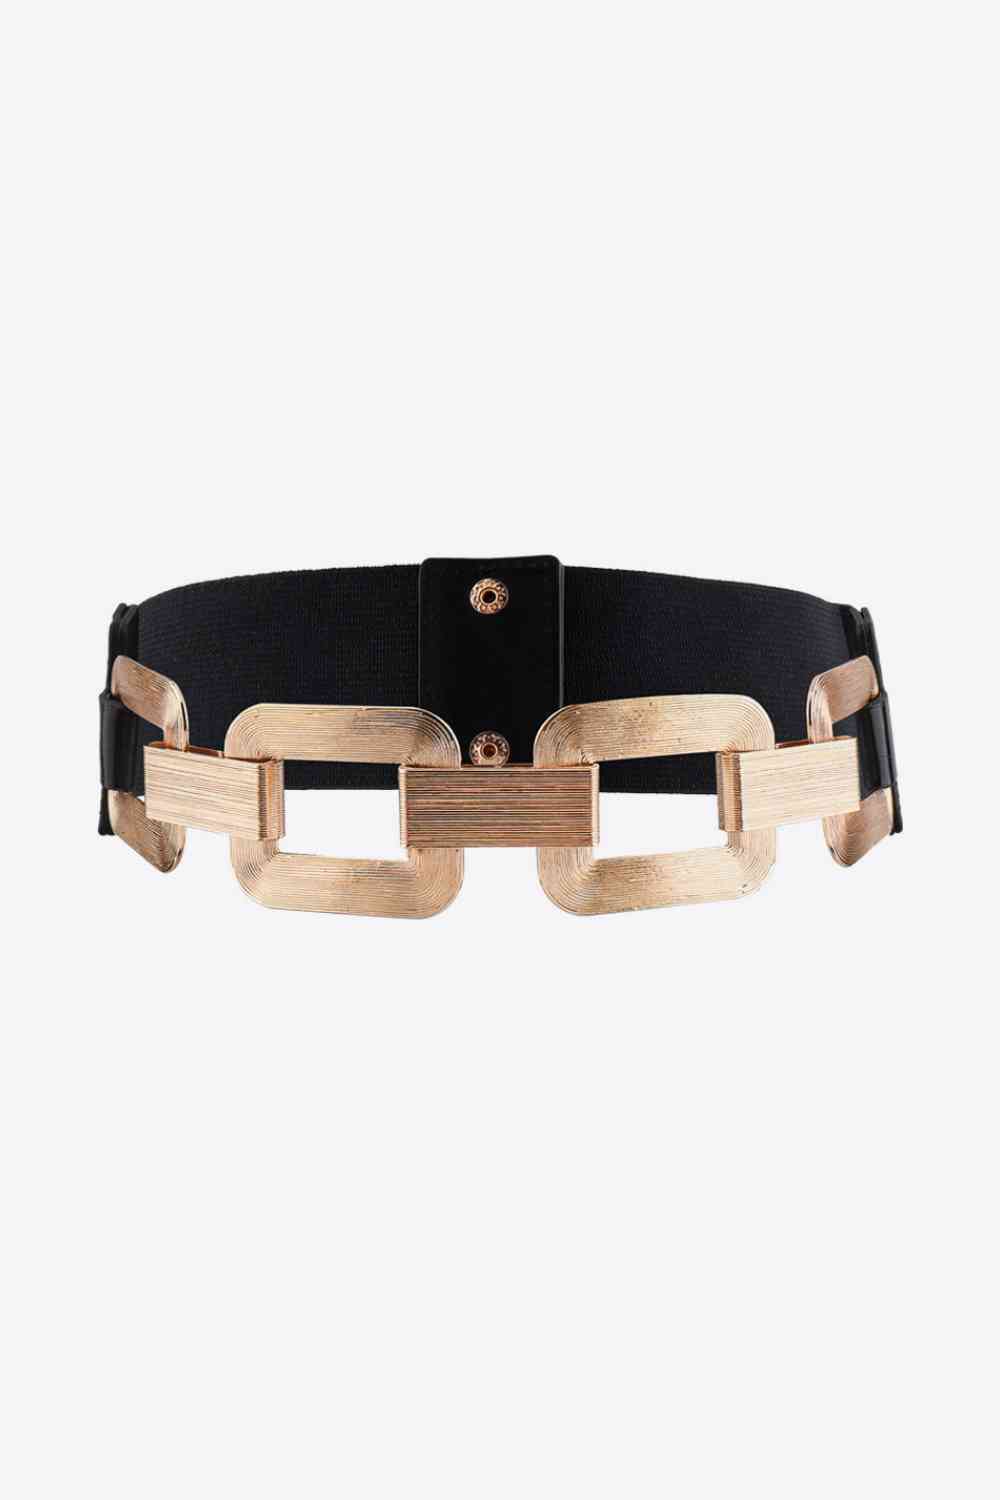 TEEK - Fashion Black and Gold Elastic Belt BELT TEEK Trend   